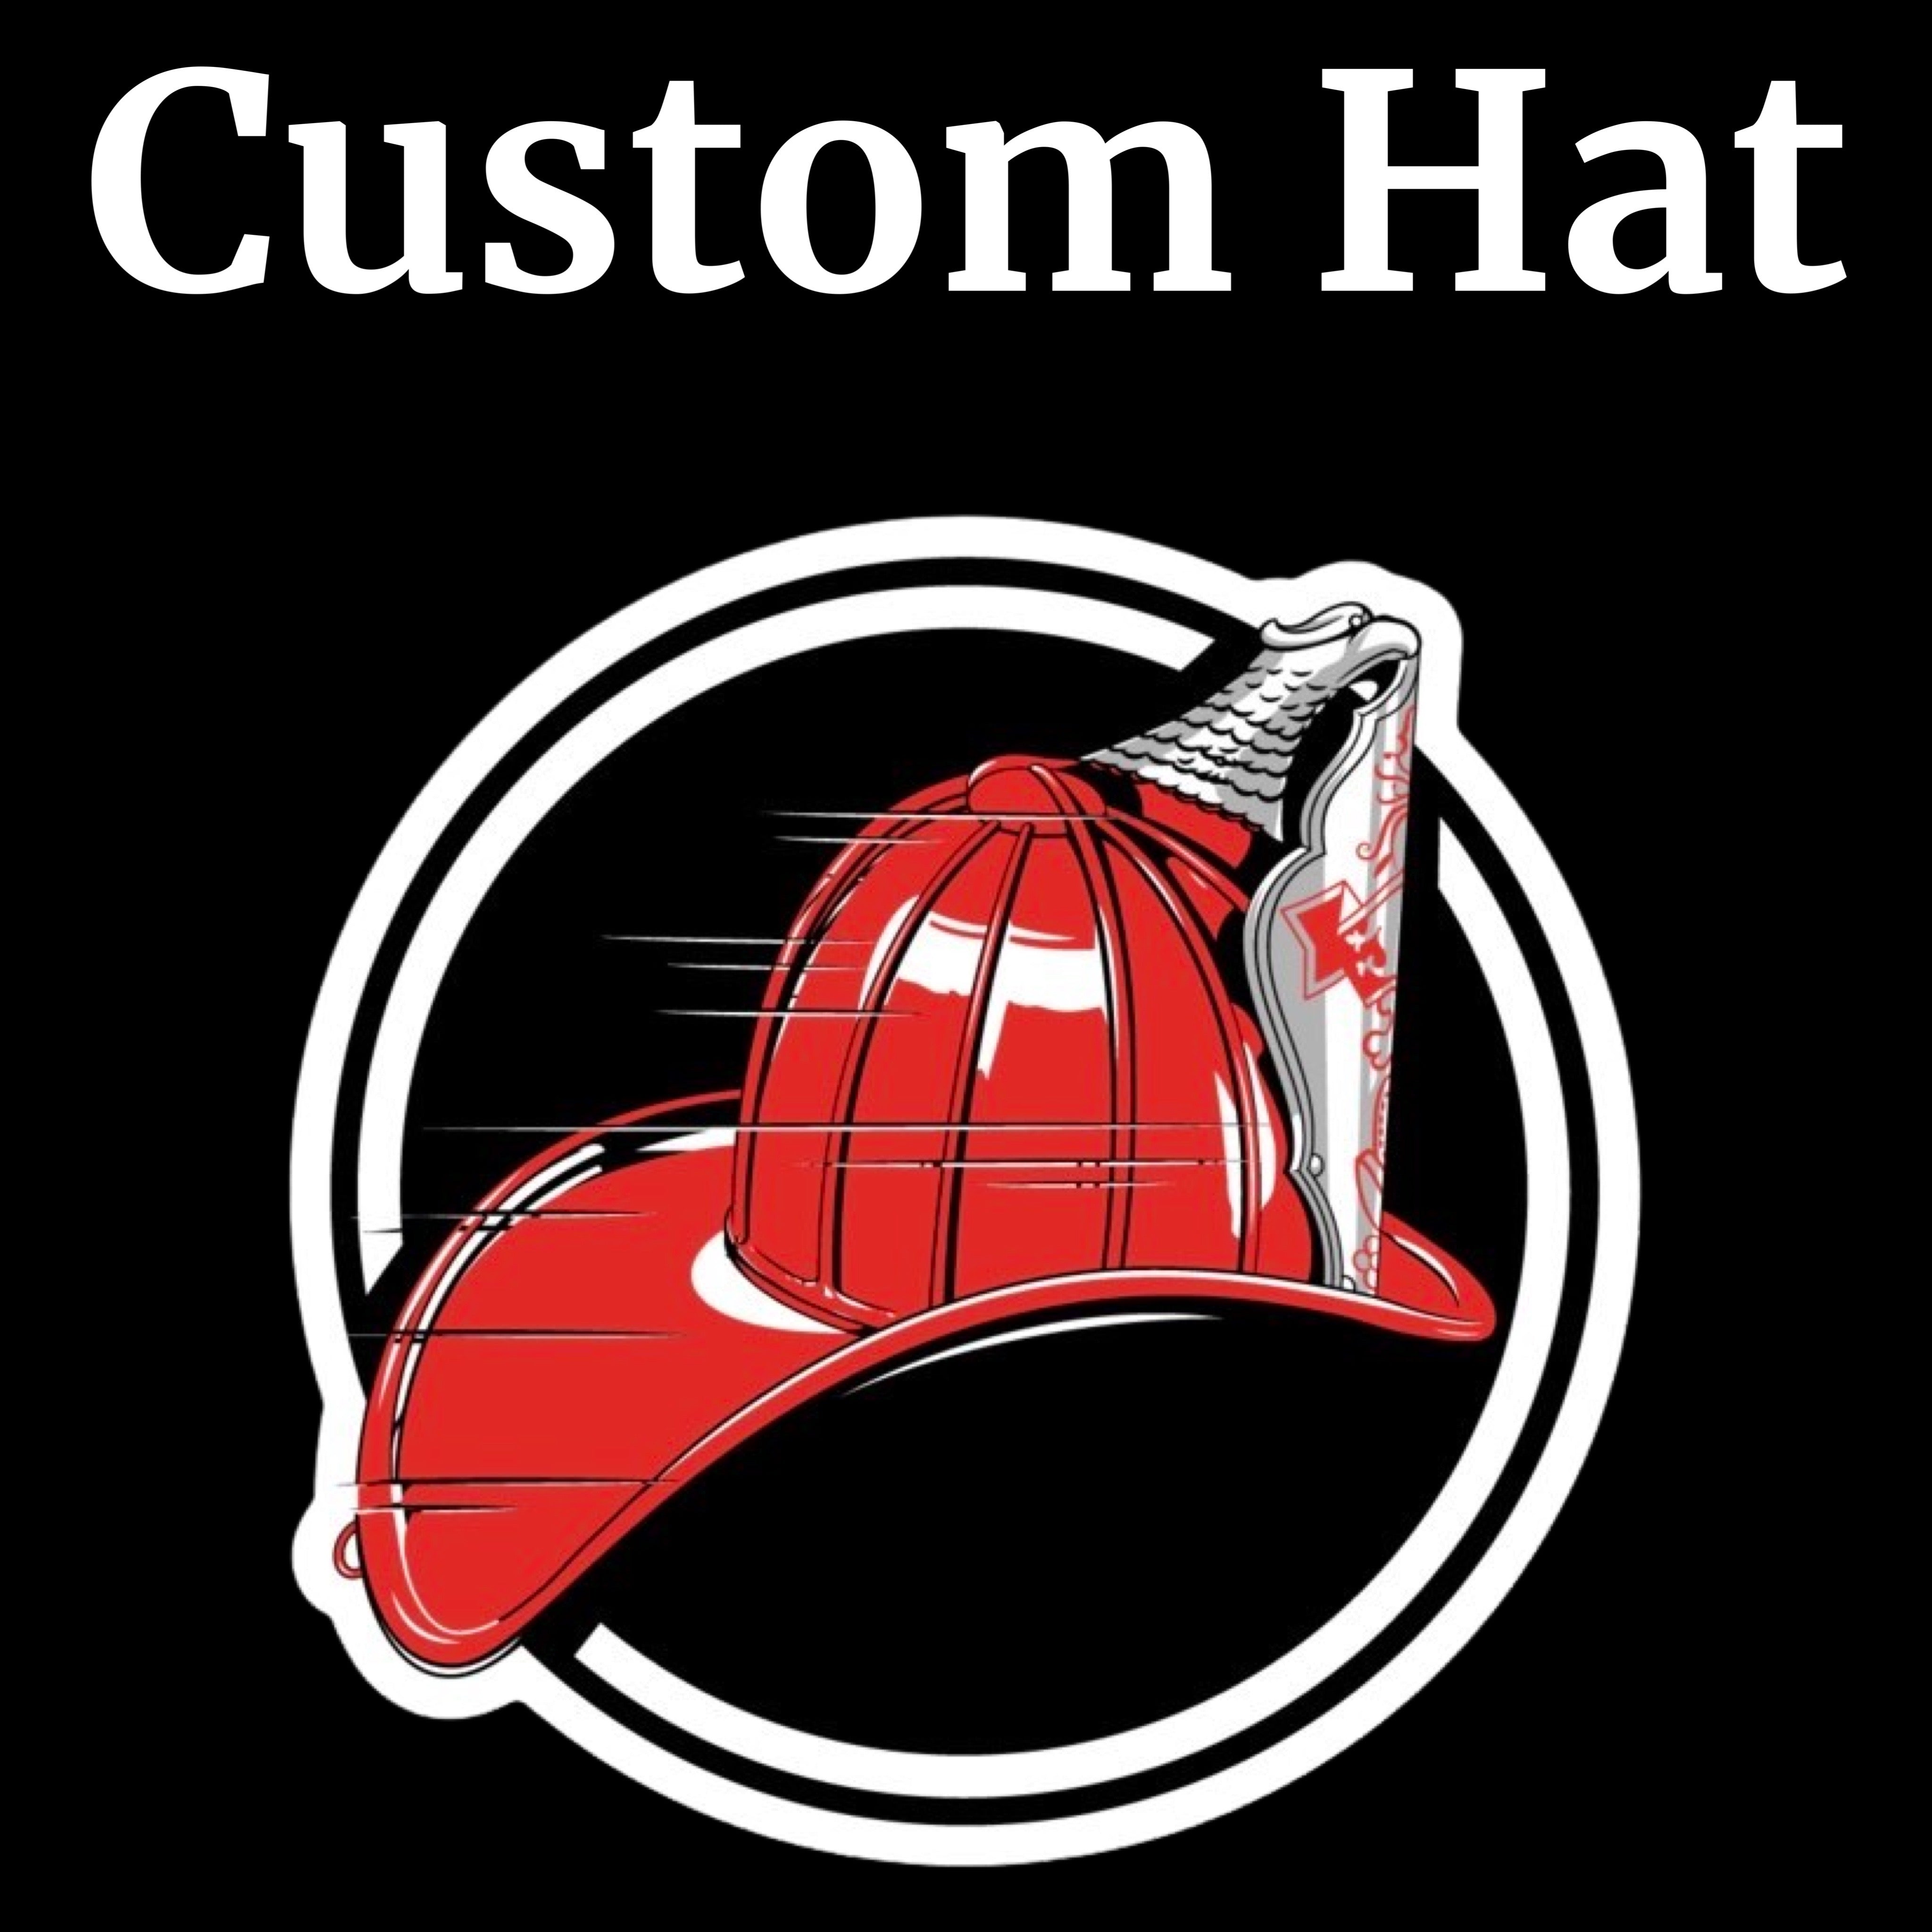 CUSTOM HAT